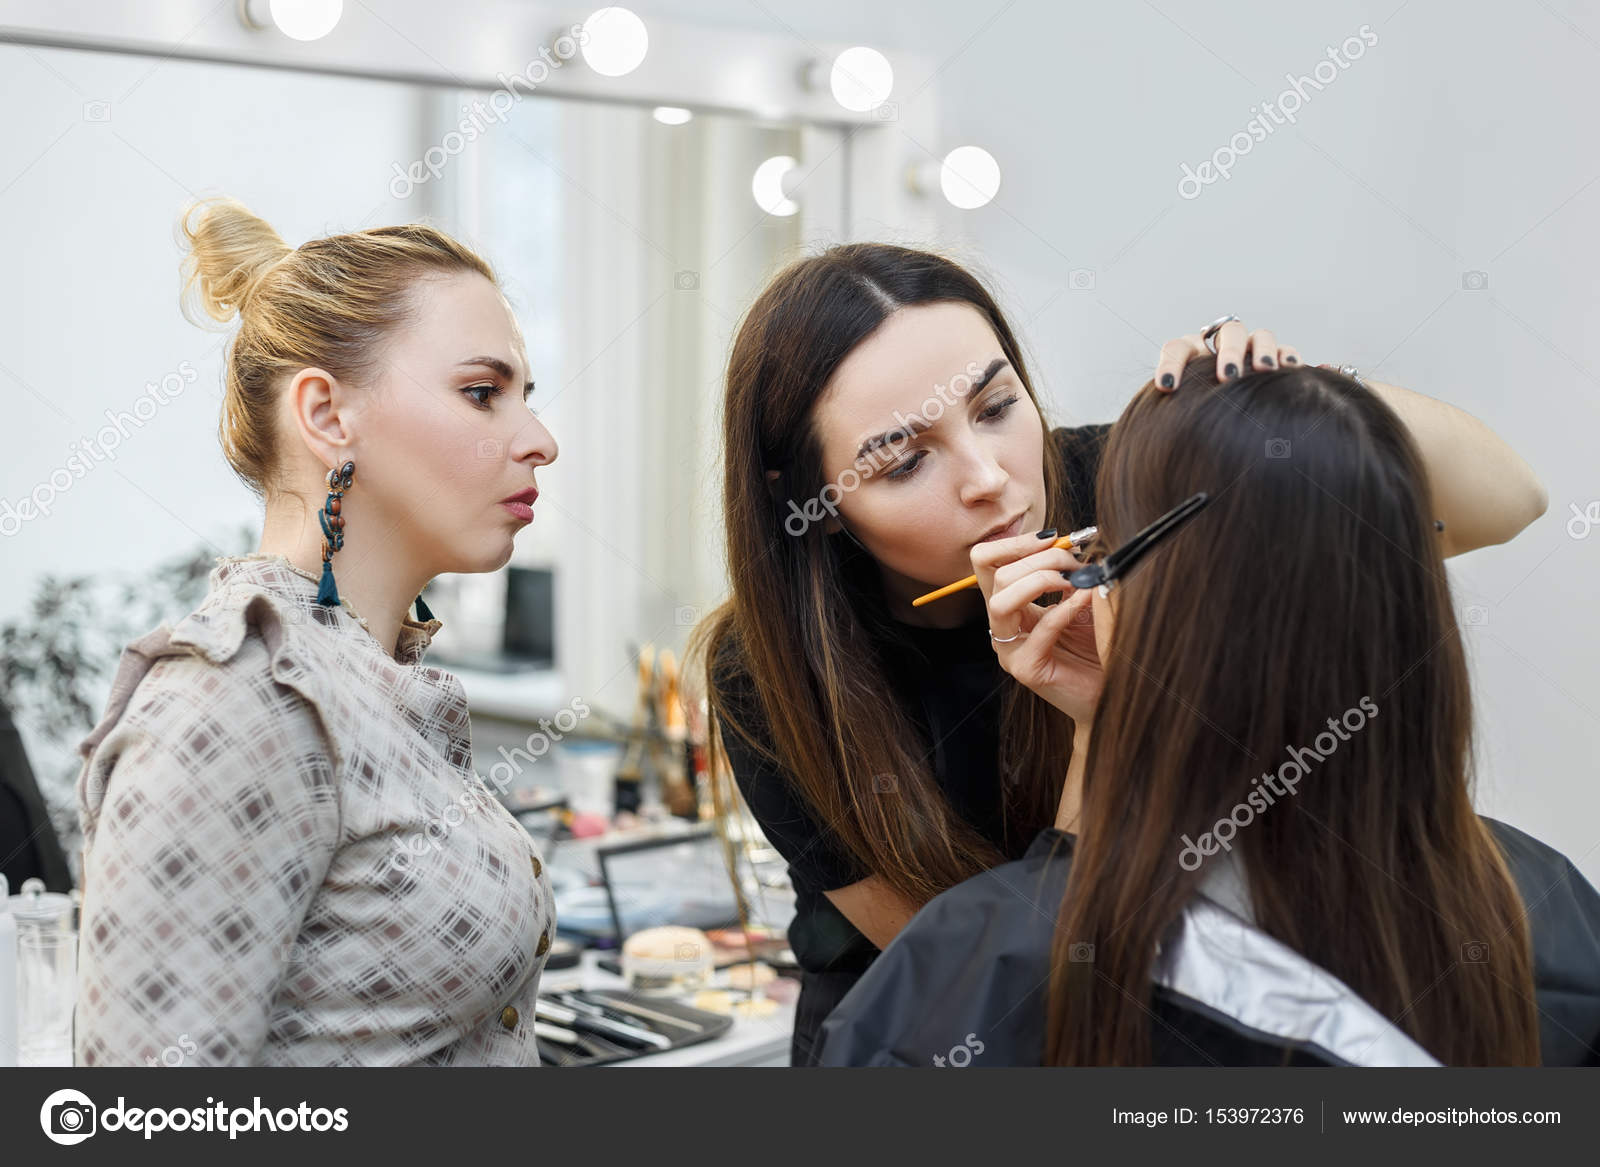 Makeup Tutorial Course Stock Photo AlterPhoto 153972376